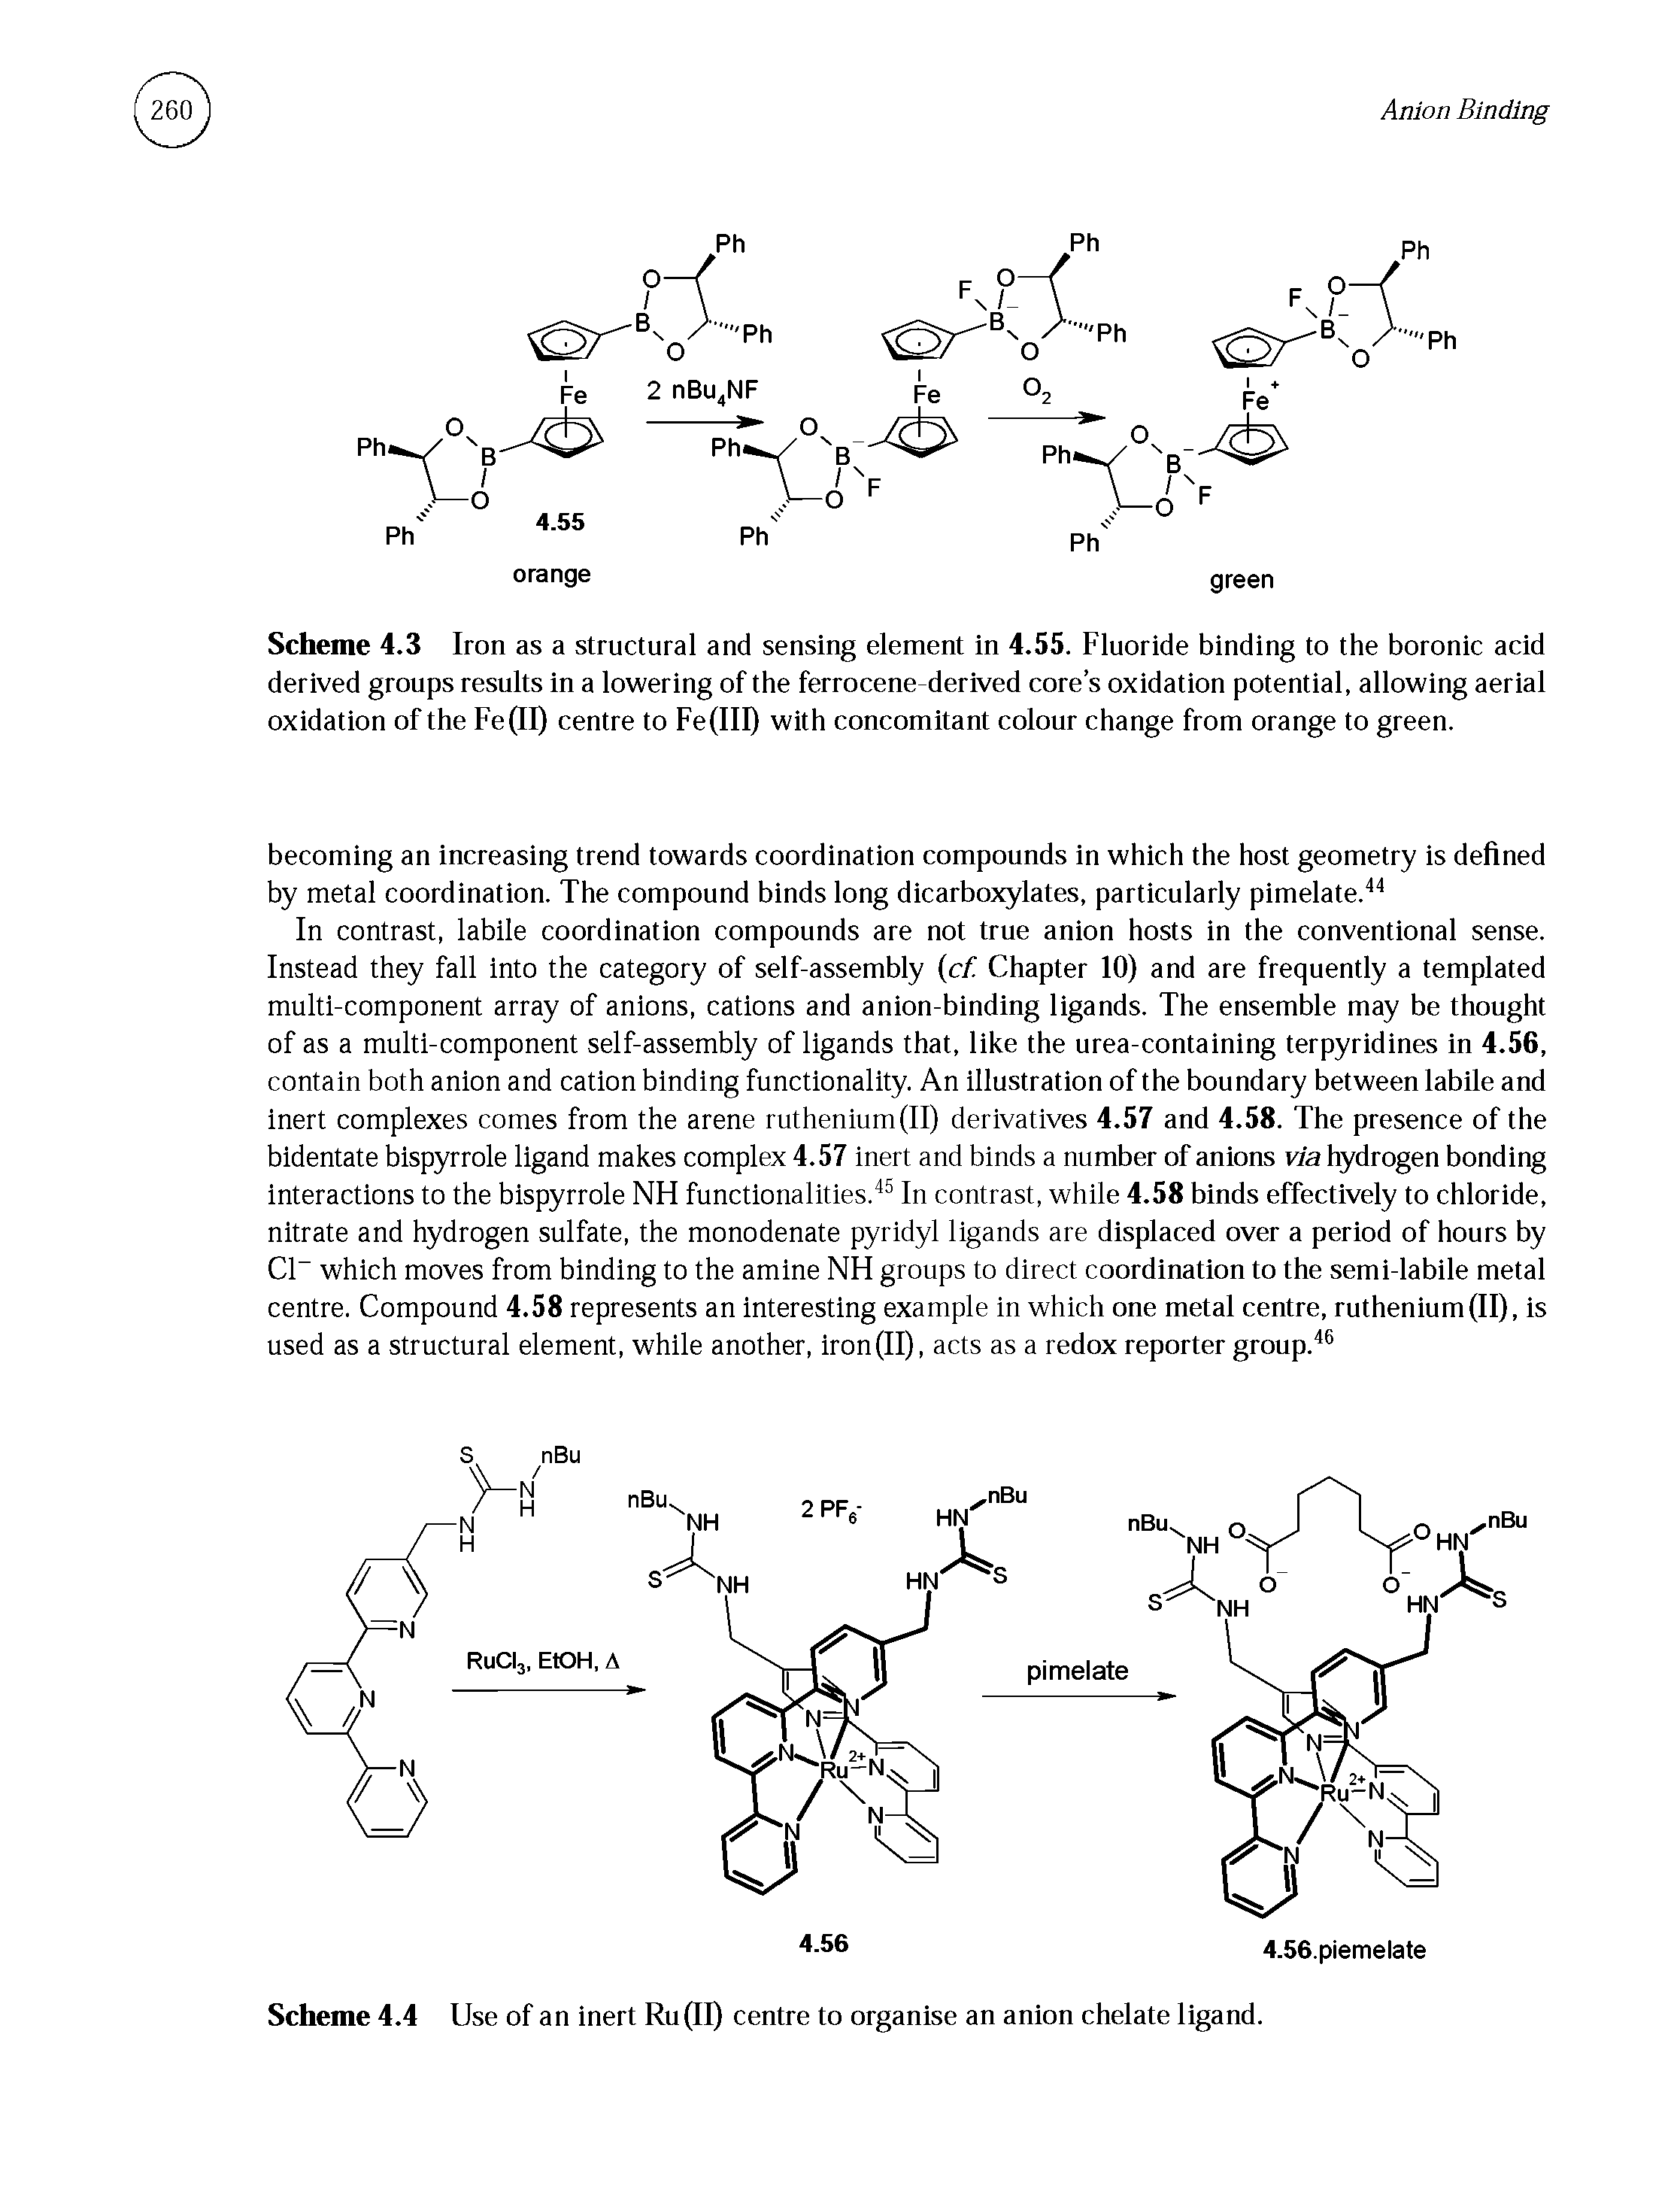 Scheme 4.4 Use of an inert Ru(II) centre to organise an anion chelate ligand.